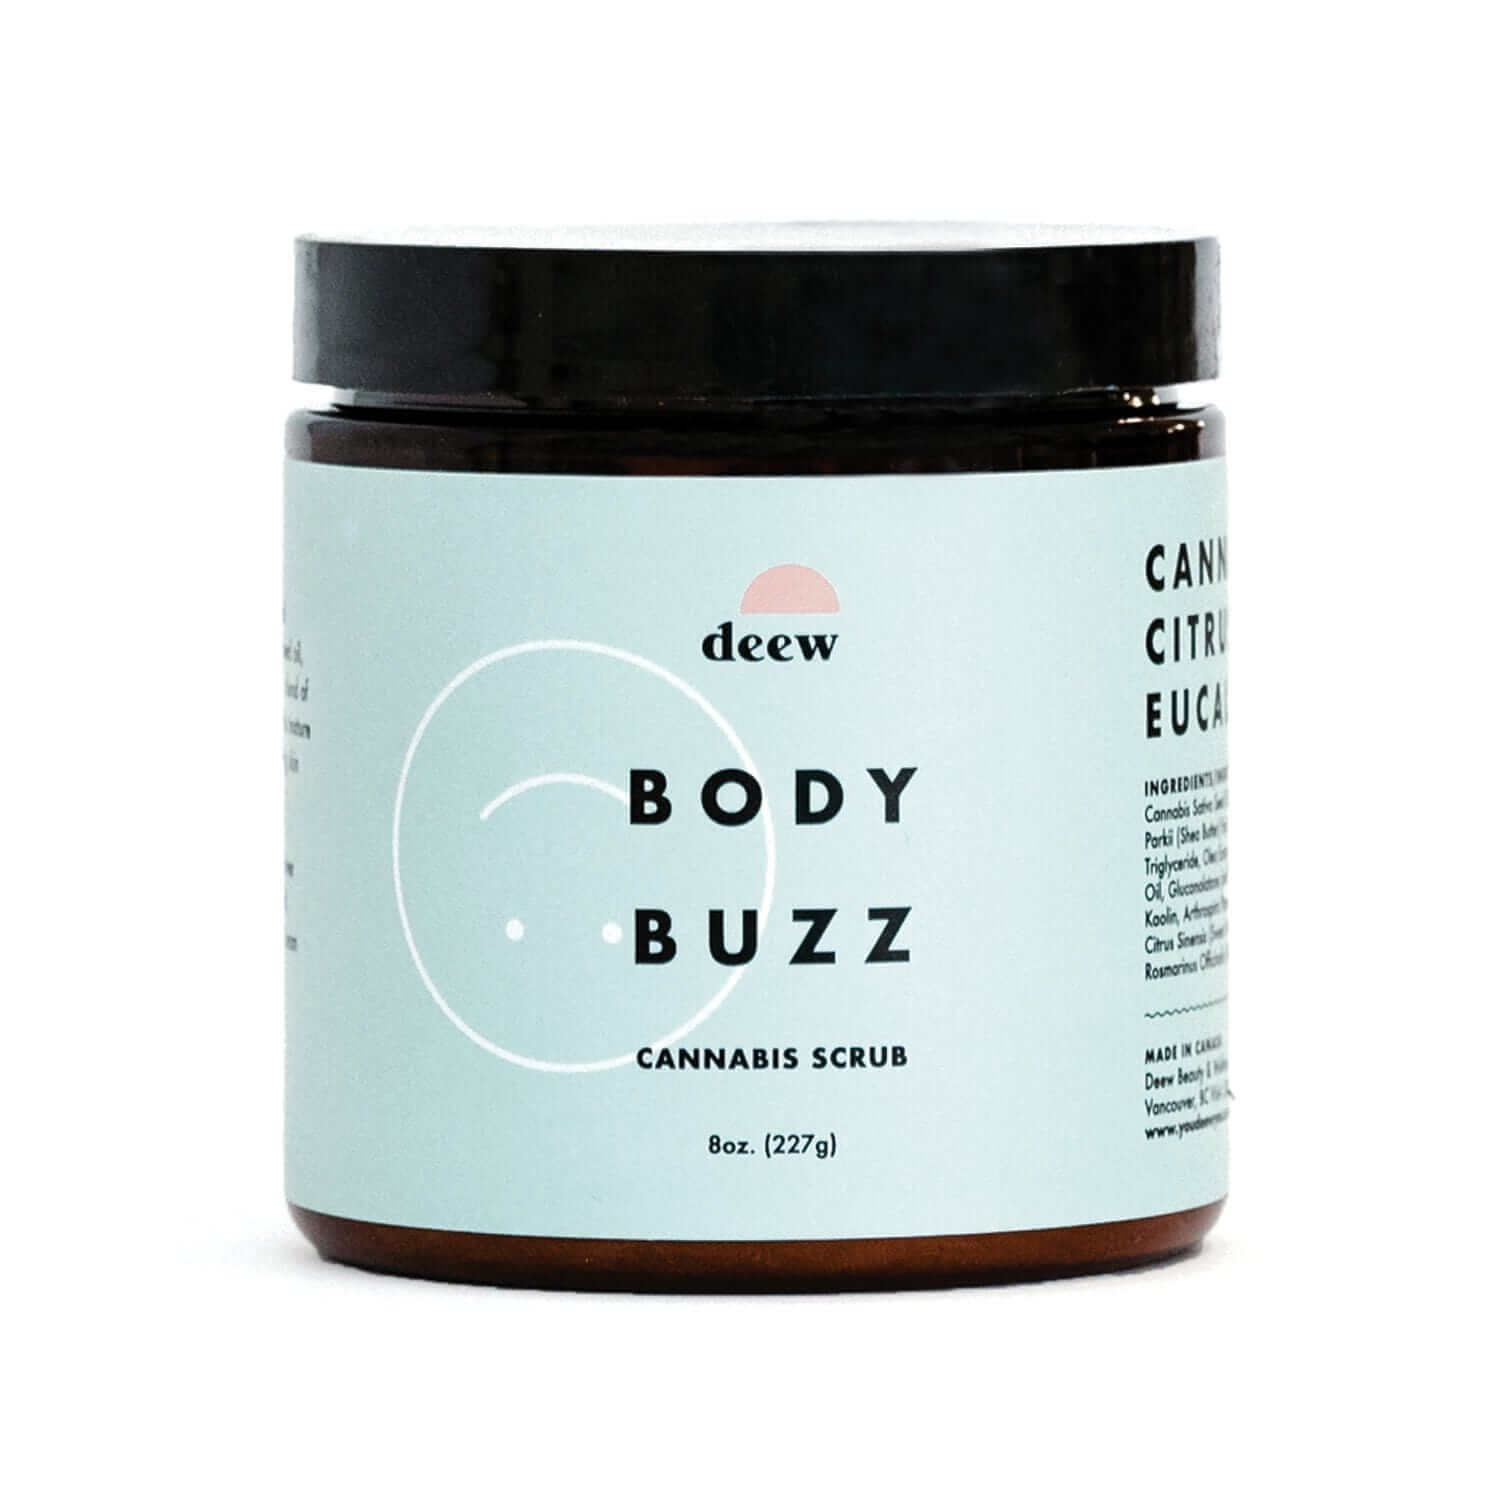 Deew Body Scrub Deew Body Buzz, made in British Columbia